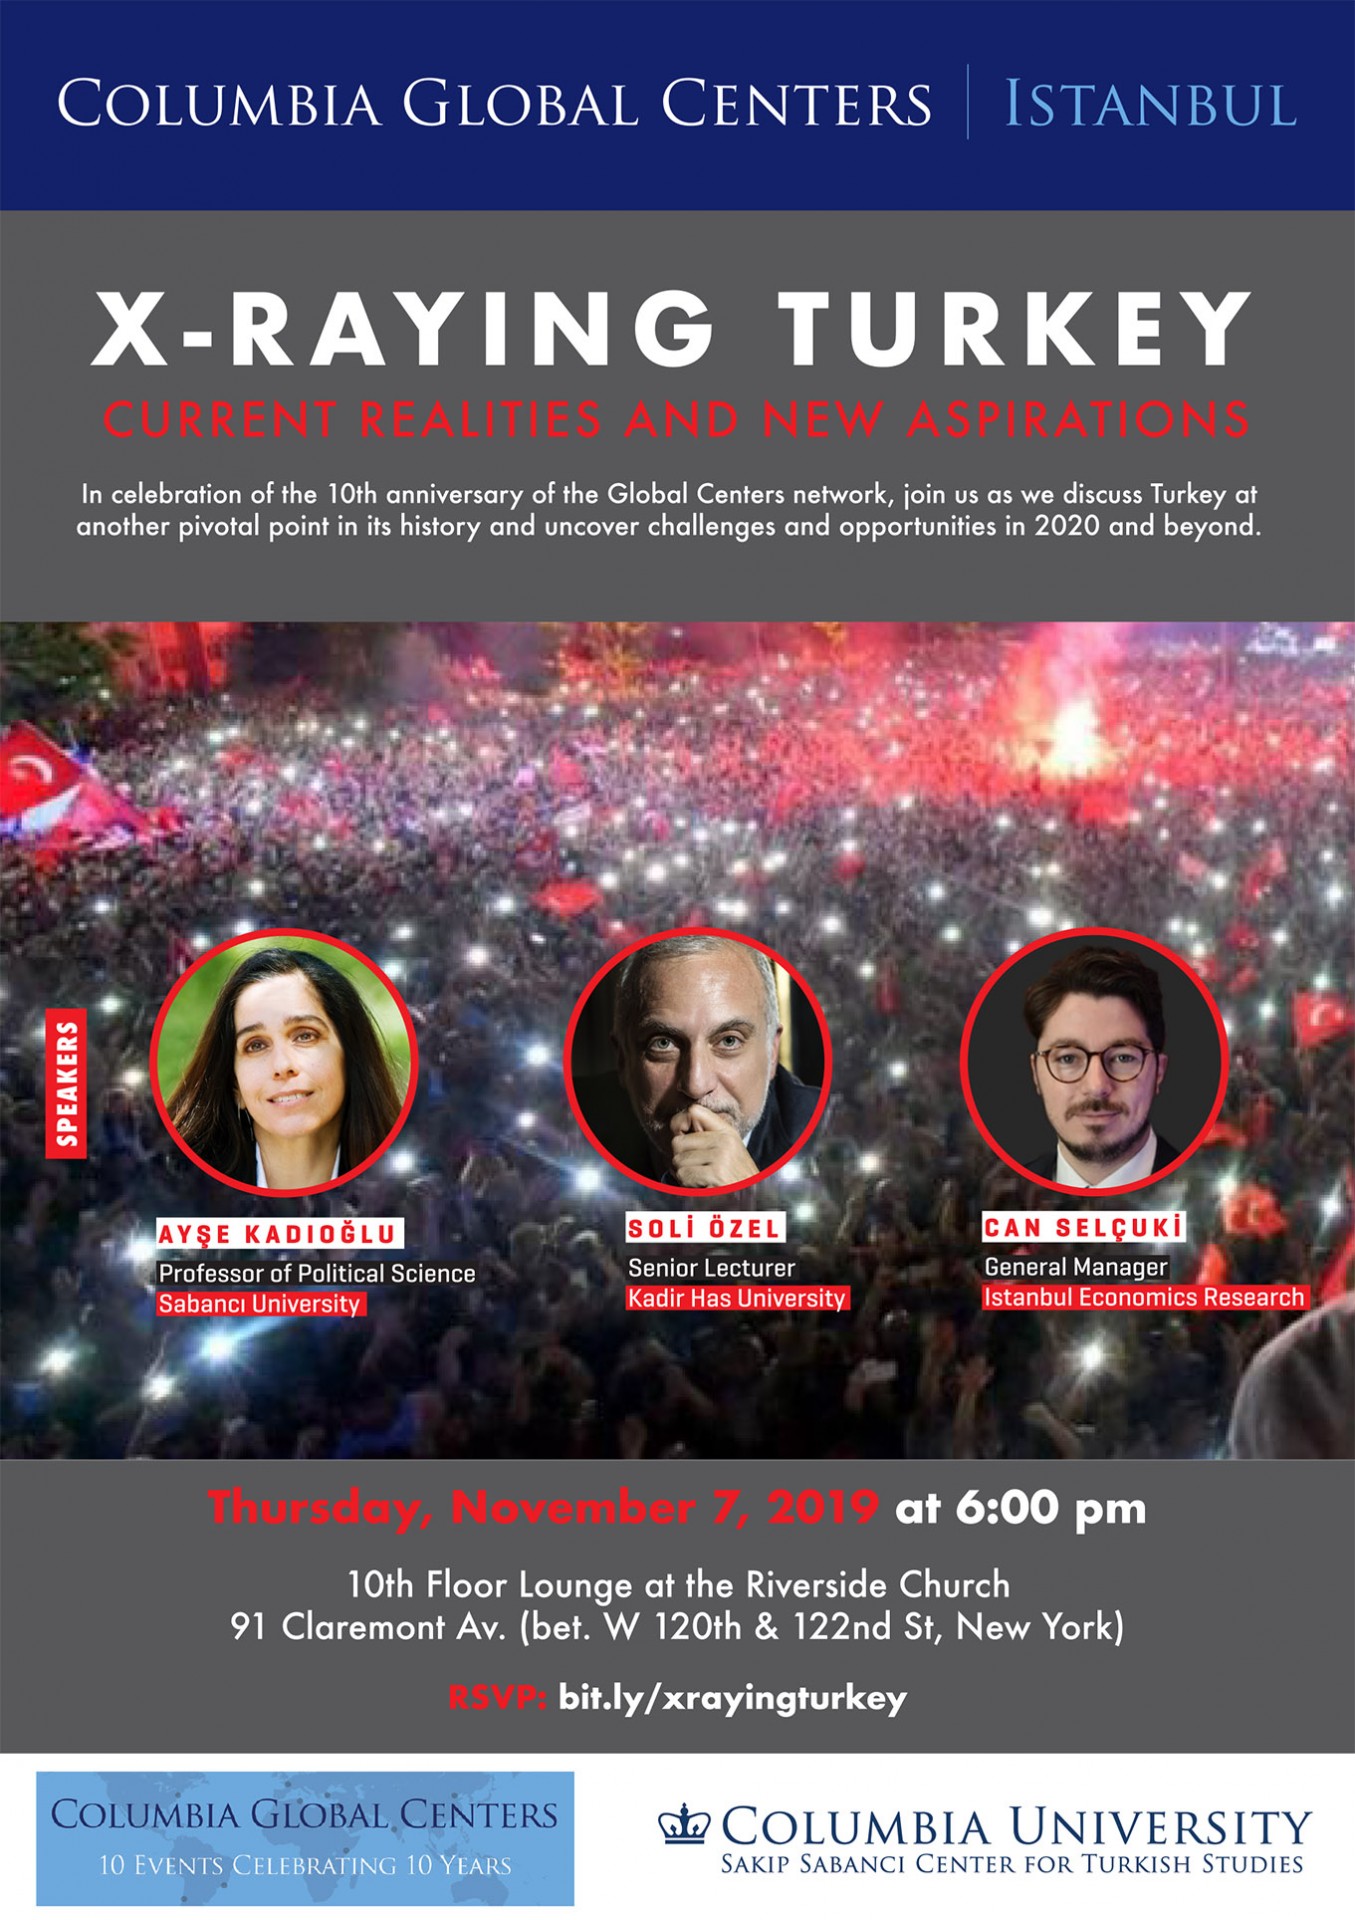 Flyer advertising event X-Raying Turkey